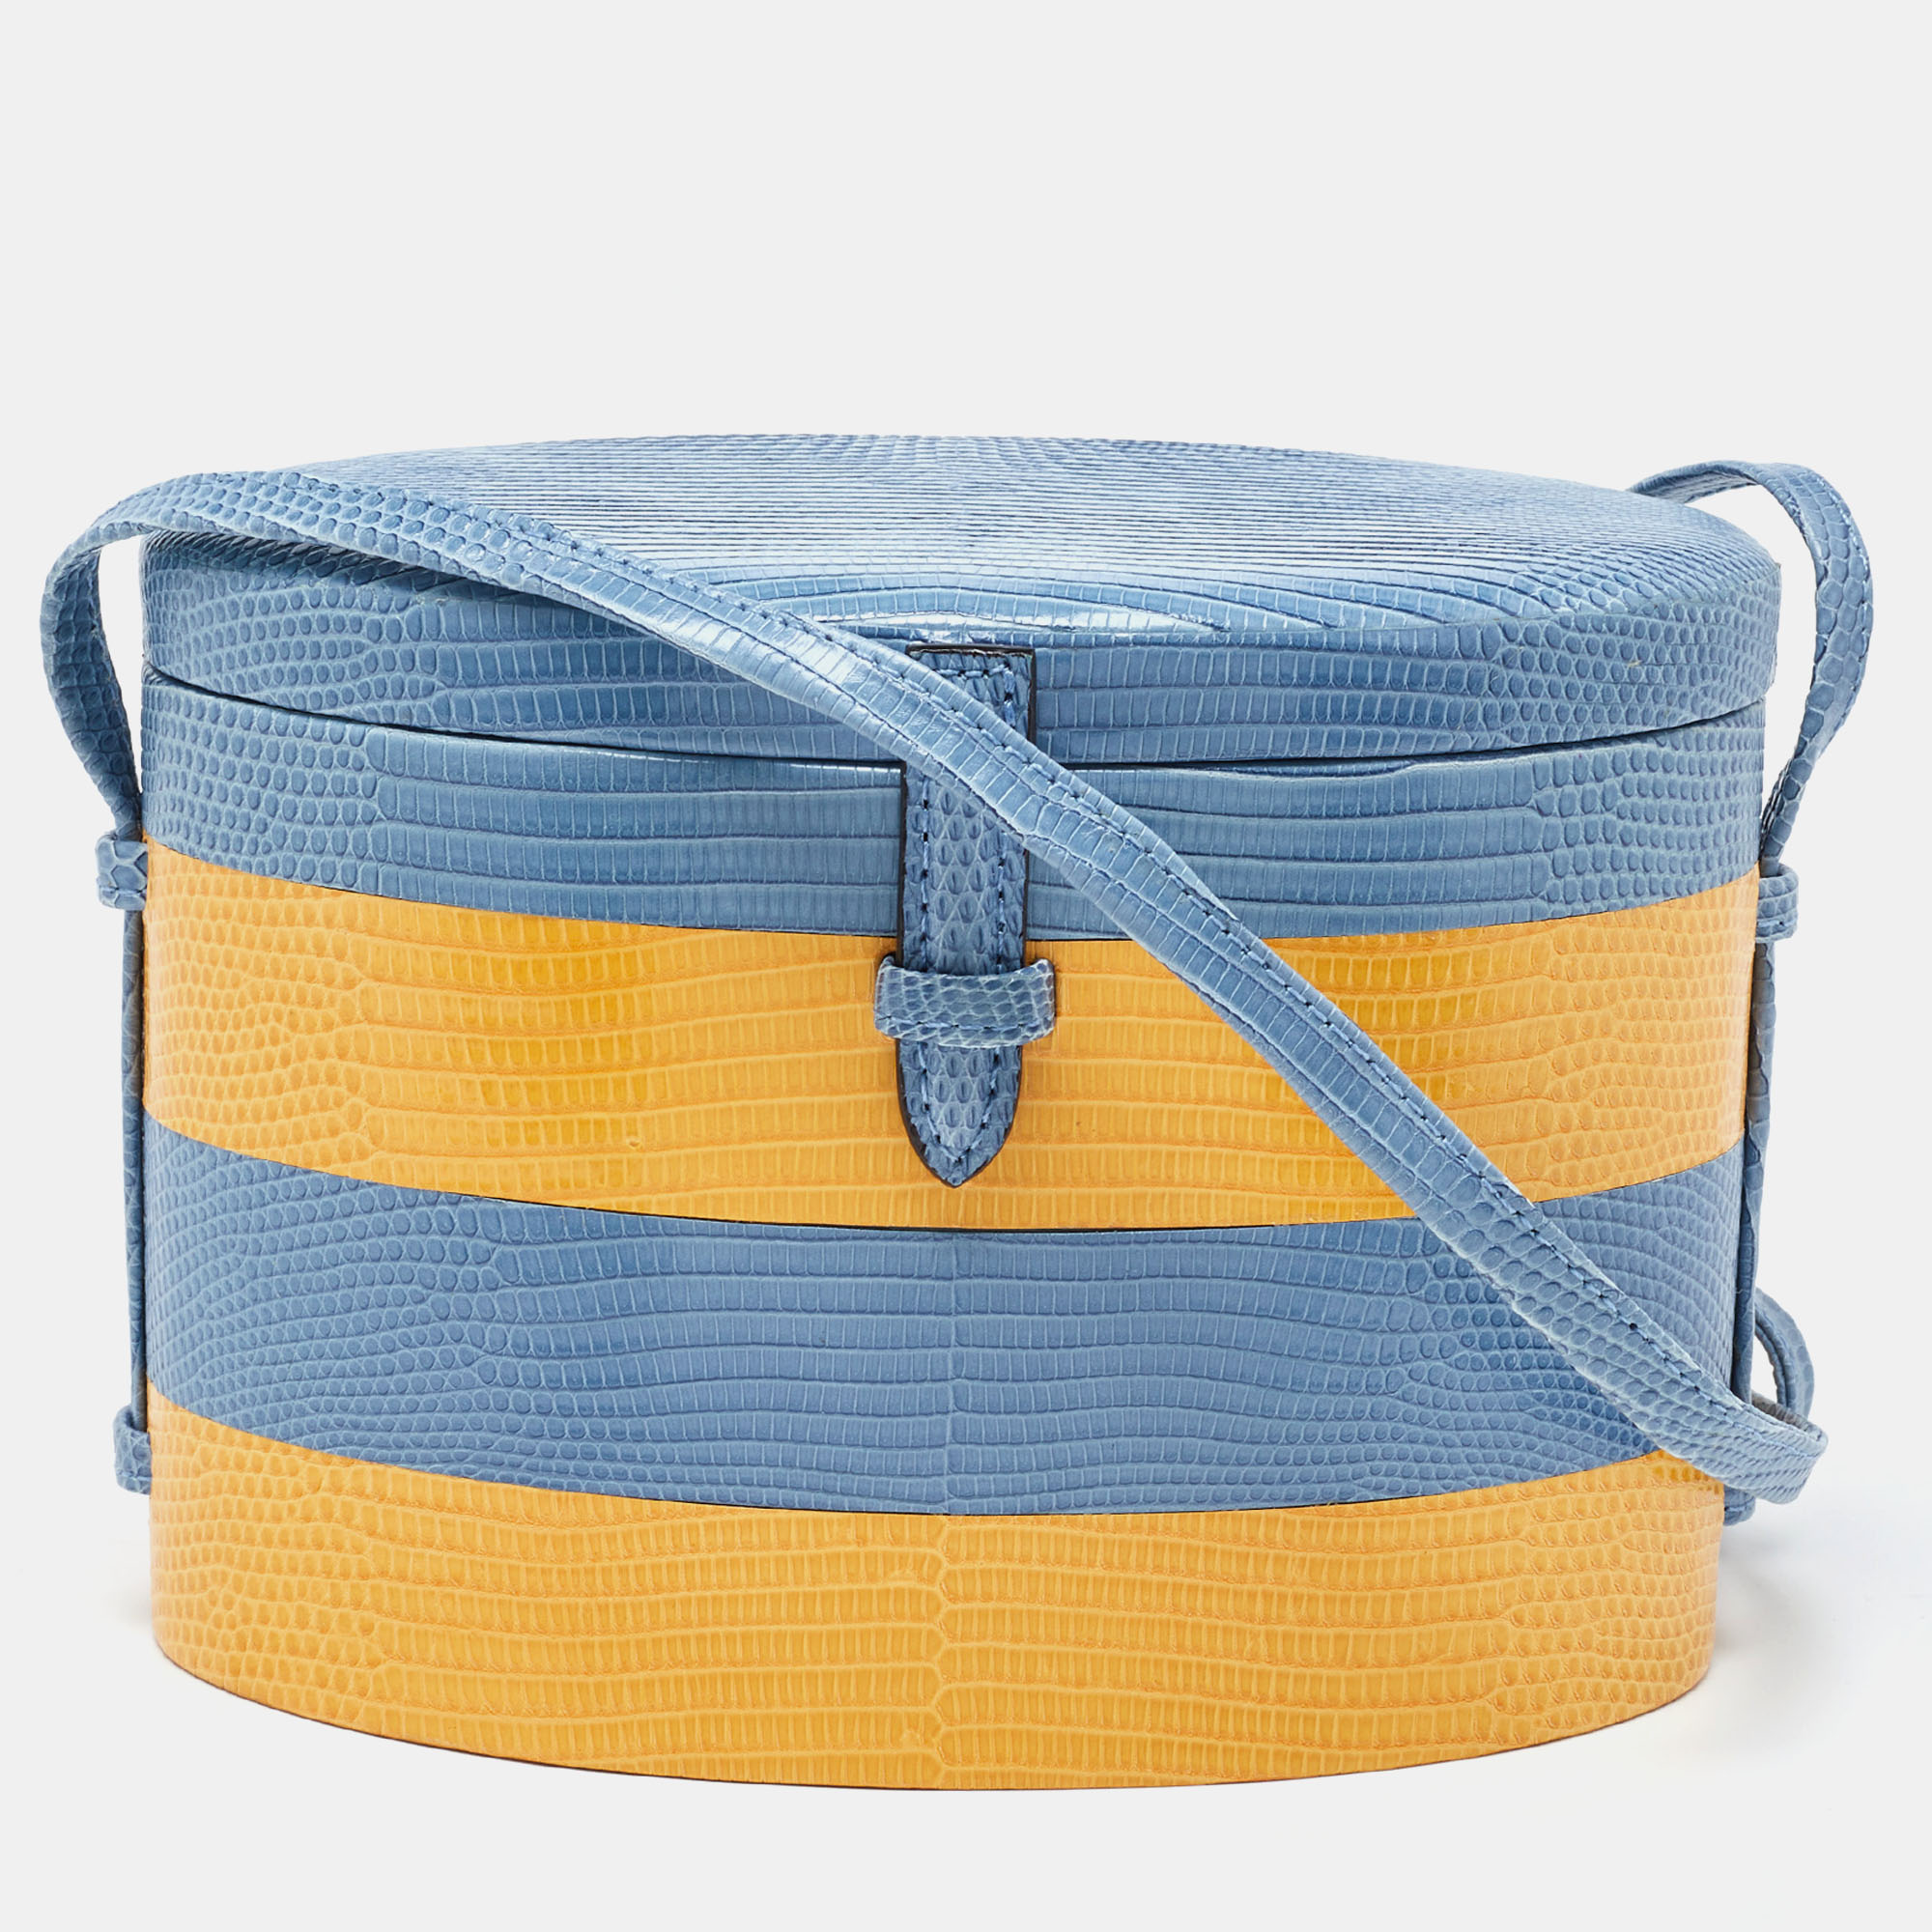 Carolina herrera blue/yellow lizard stripe trunk bag